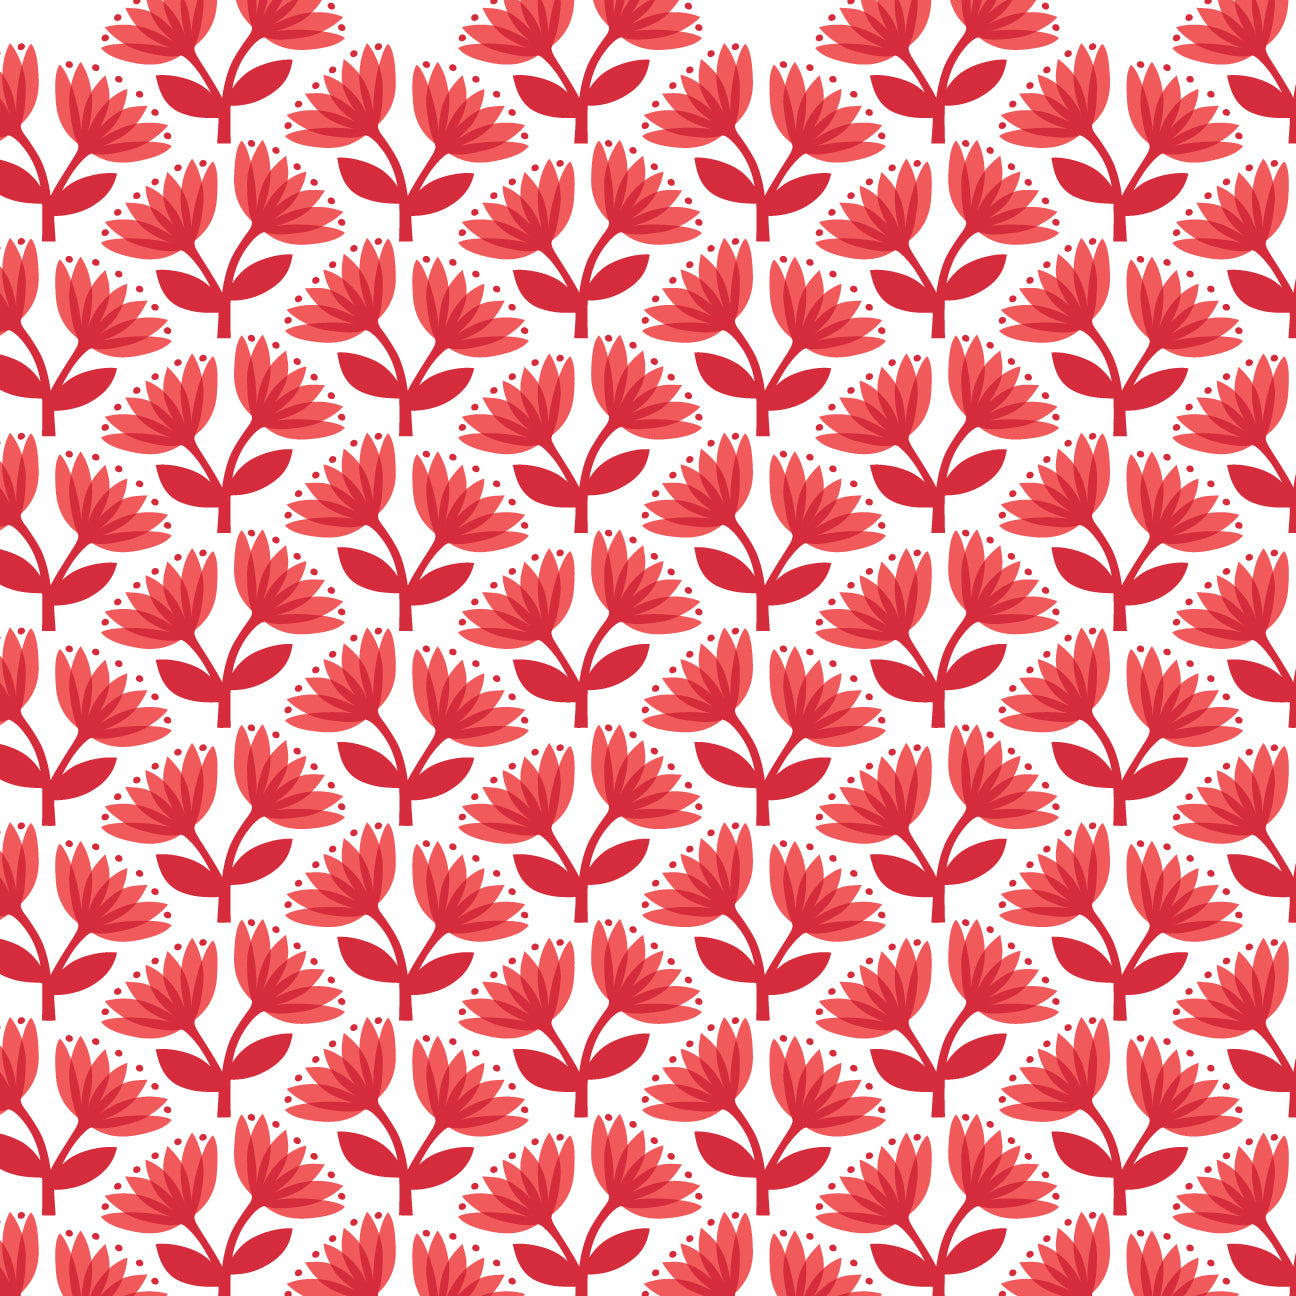 Summer Romper - Lotus Floral Red & Coral